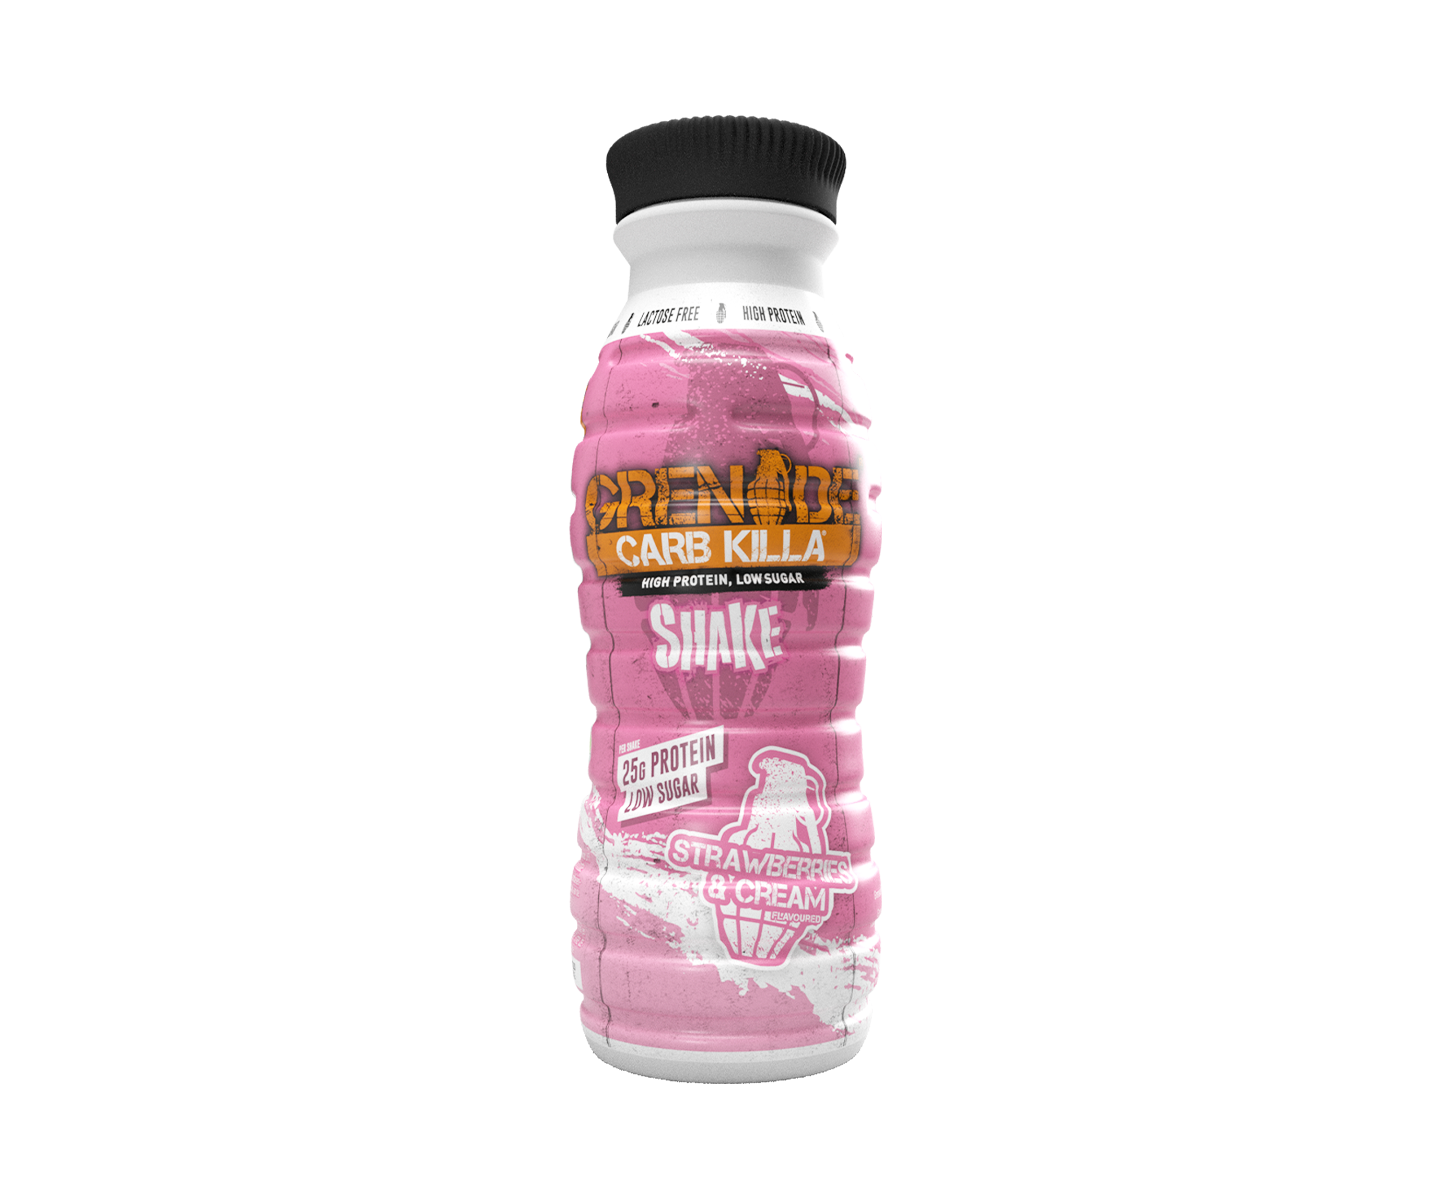 Carb killa protein shake, shake proteic rtd cu aroma de capsuni, 330ml - gnc